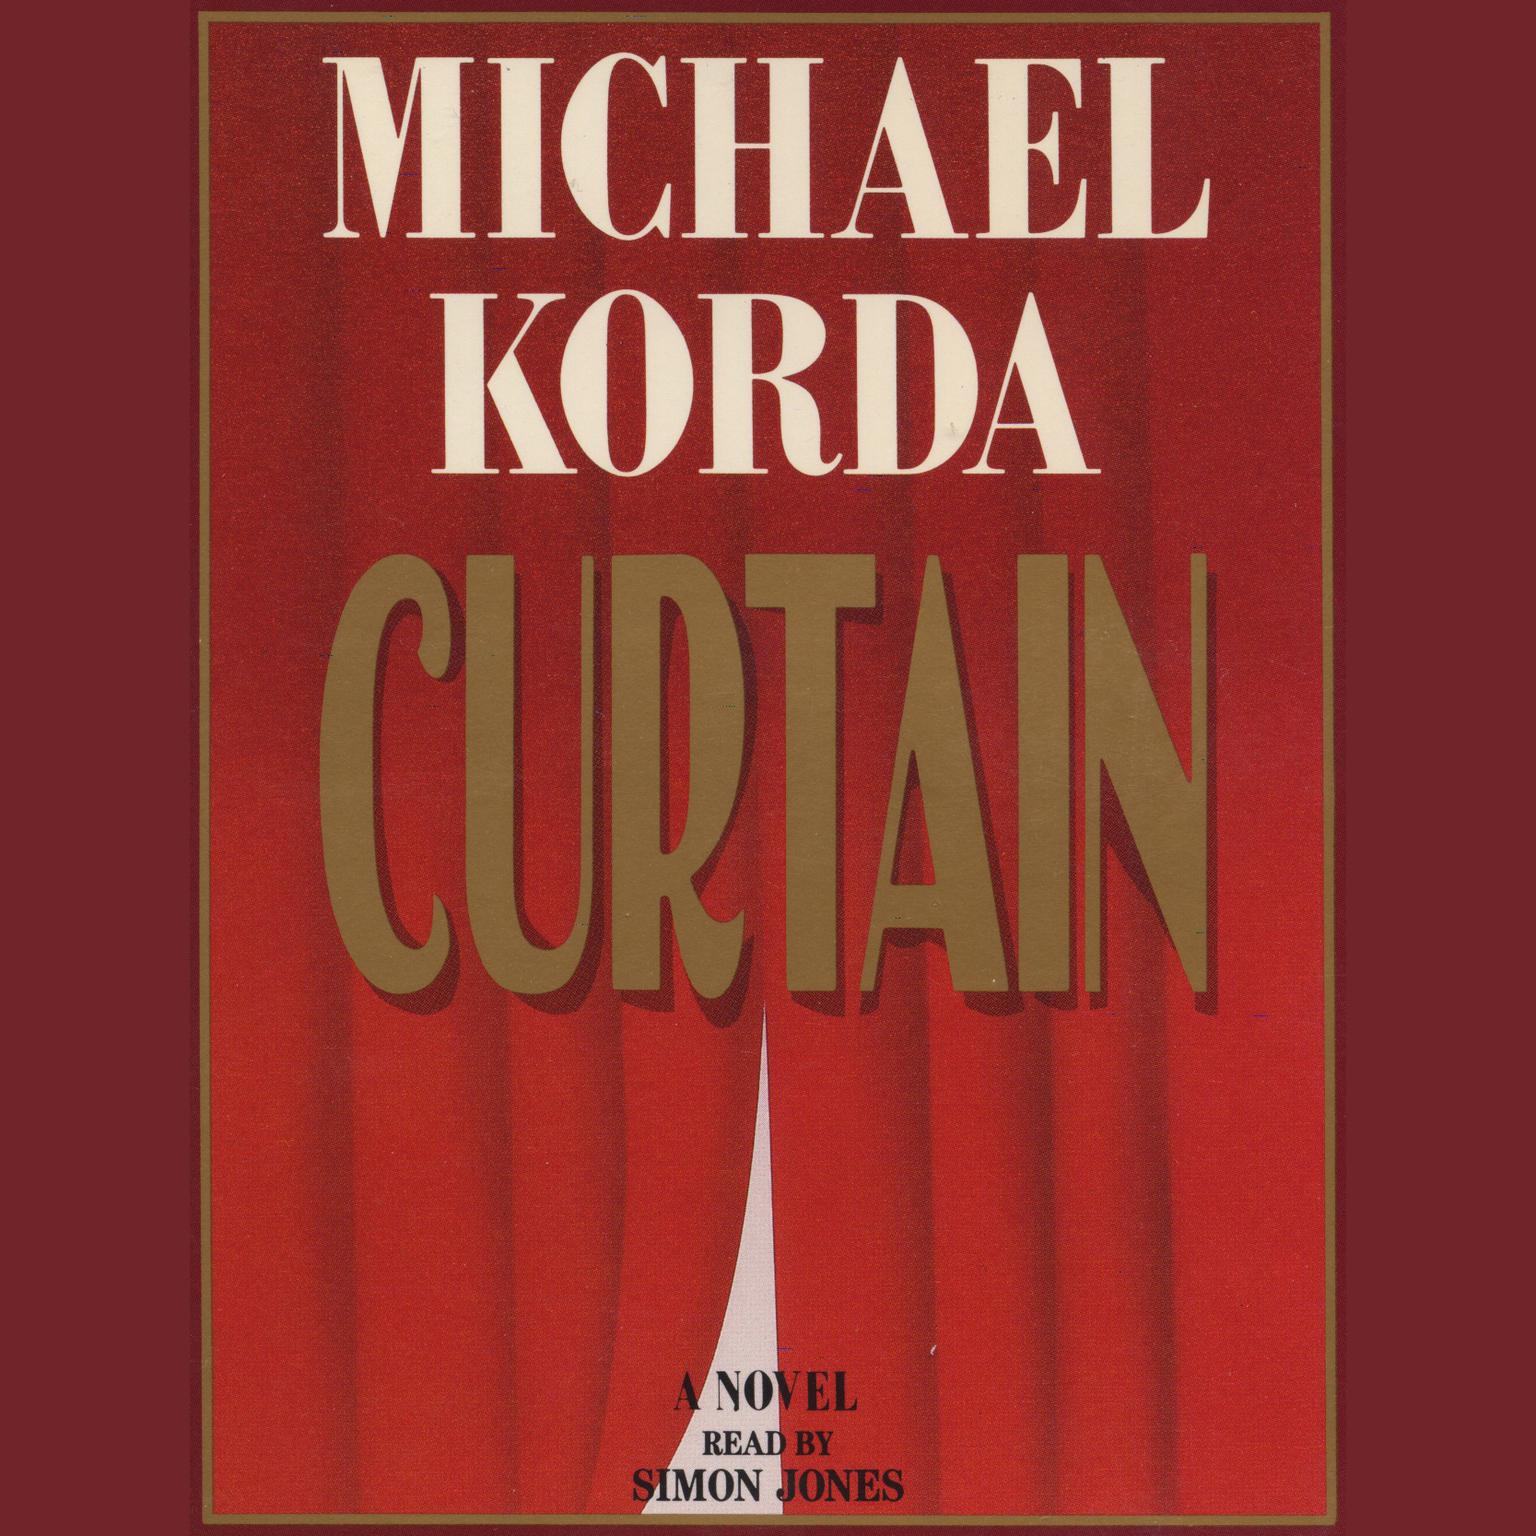 Curtain (Abridged) Audiobook, by Michael Korda